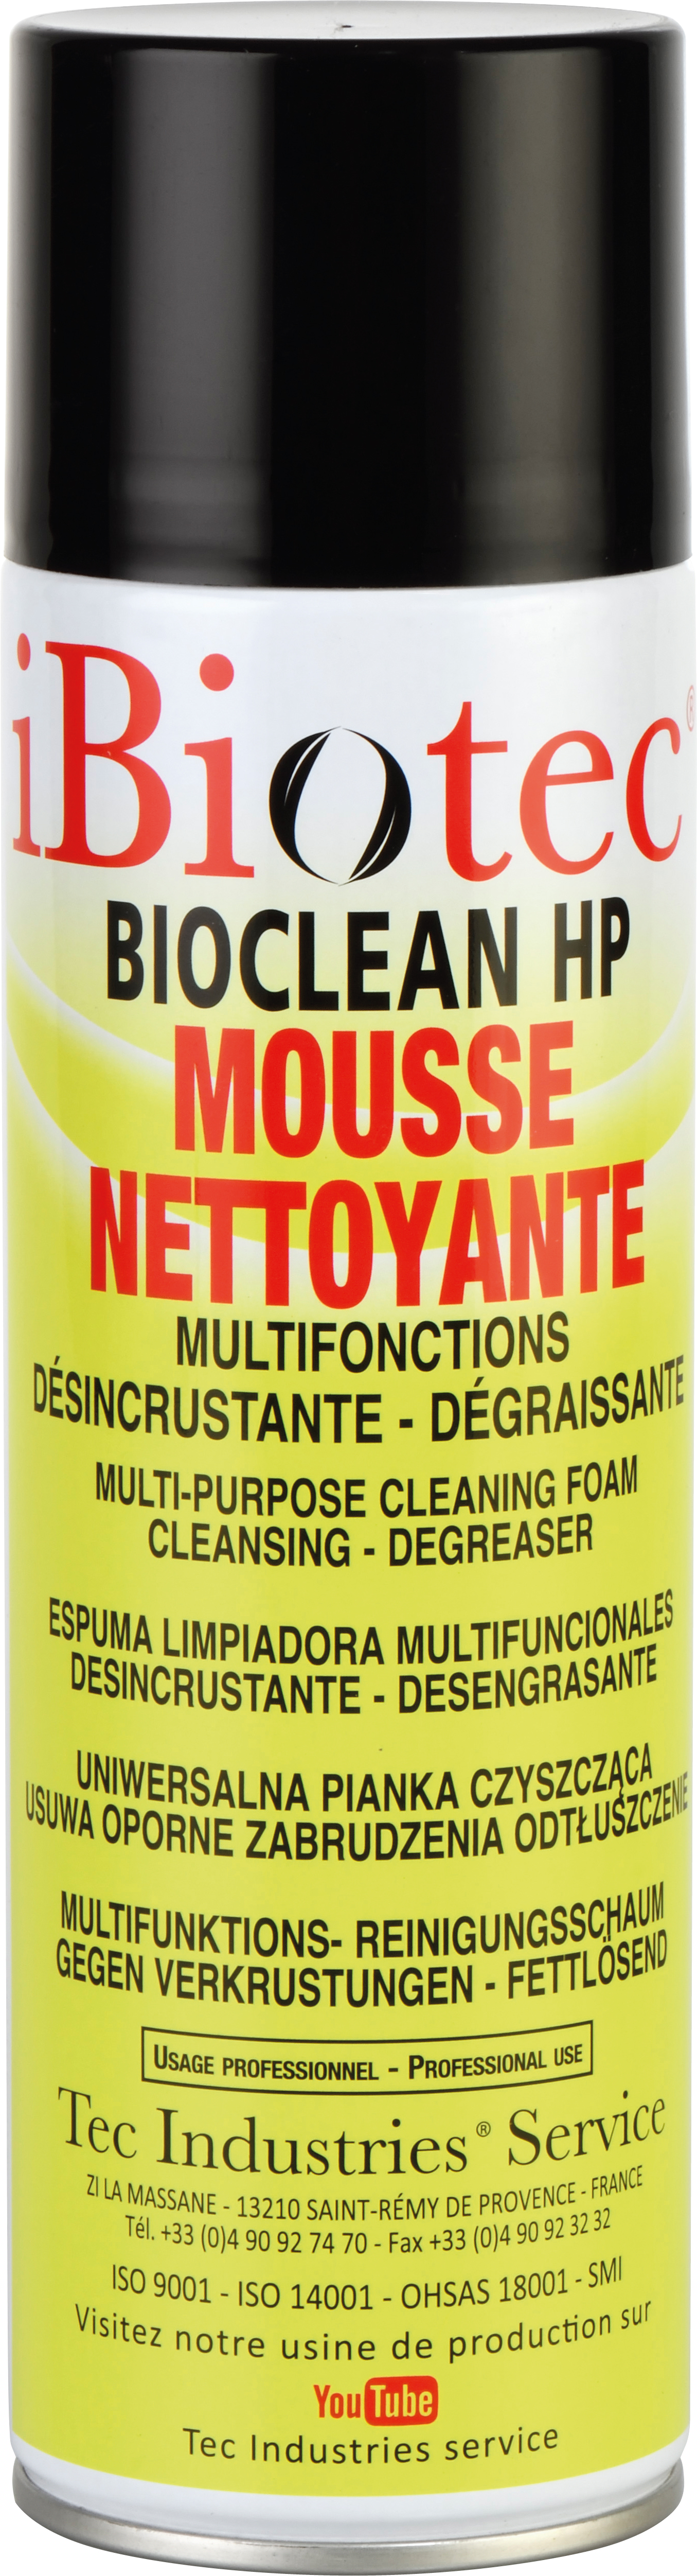 Multi-purpose cleaning foam aerosol, blowing foam cleaner spray